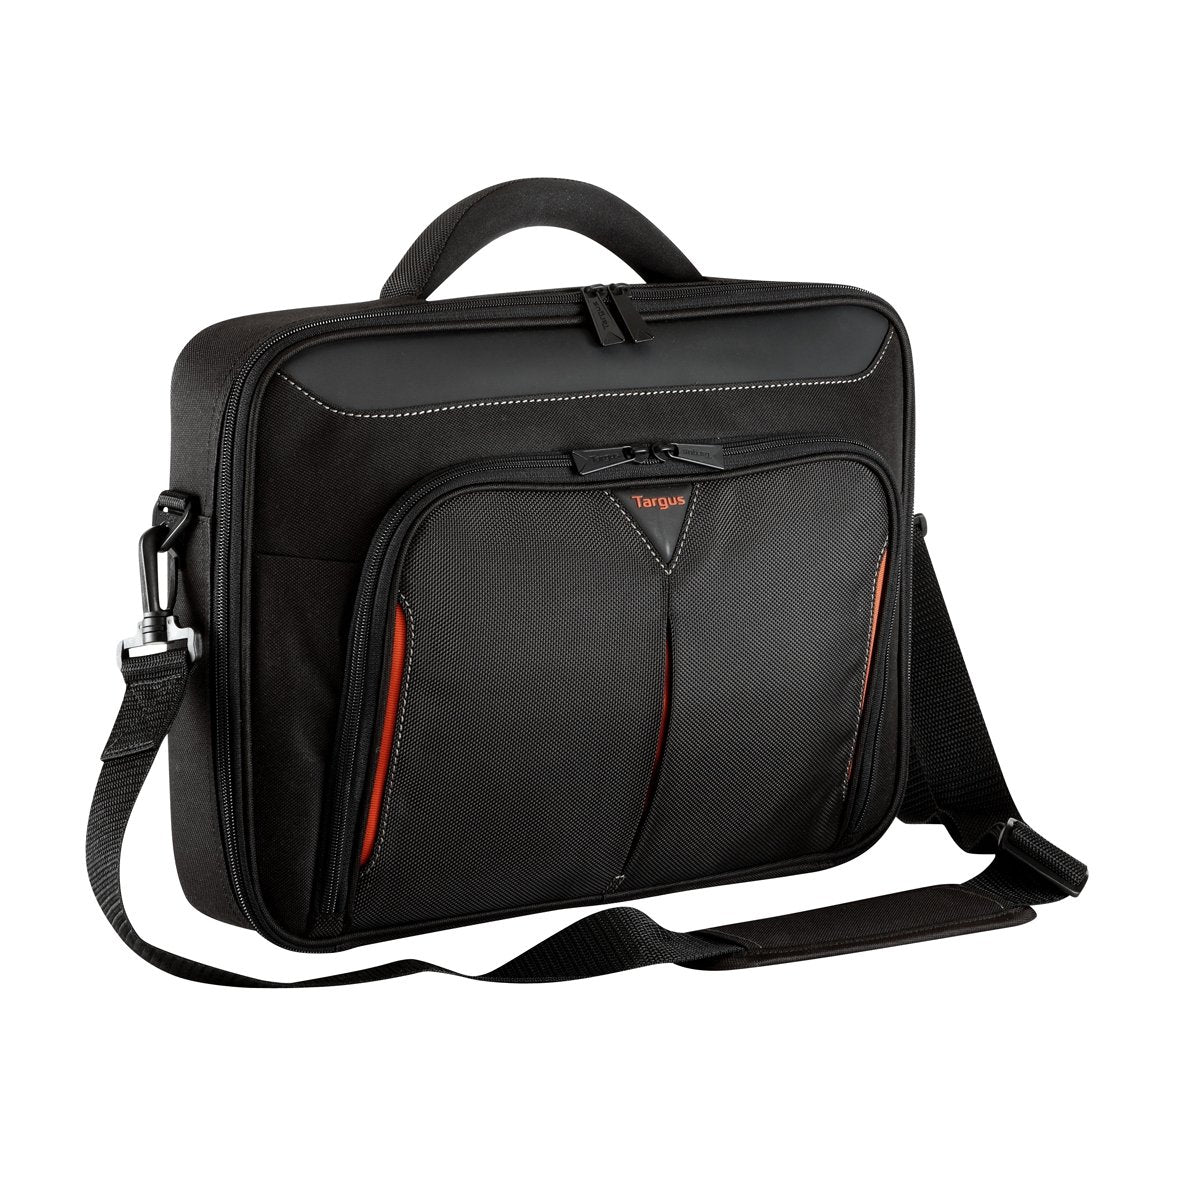 Targus Classic+ 15-15.6 Clamshell Laptop Bag - Black/Red